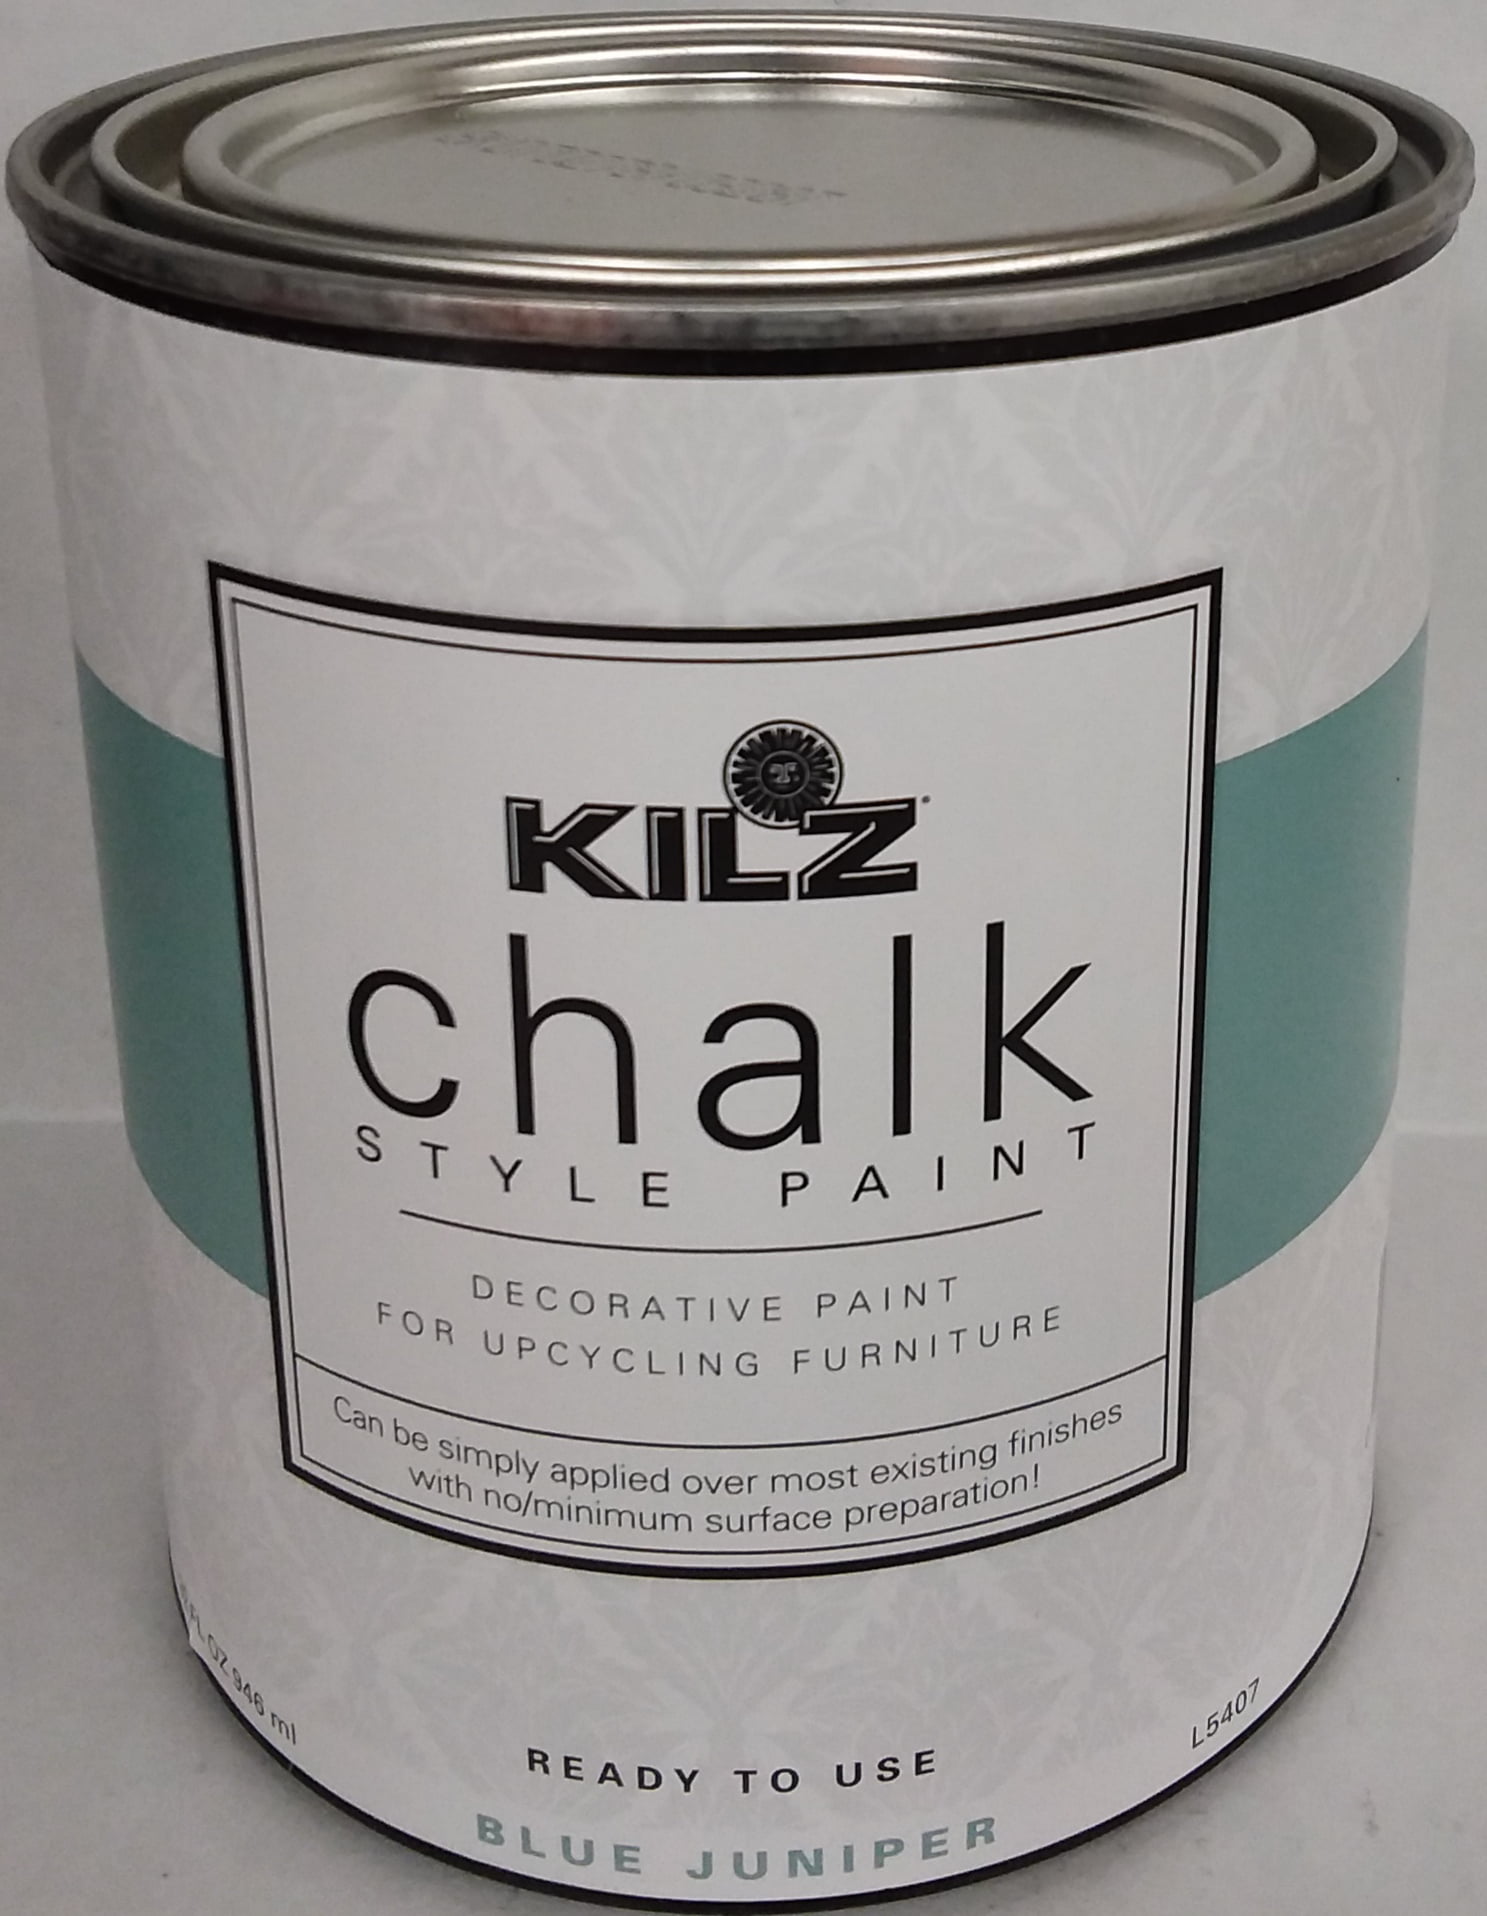 How much does a bucket of paint cost at walmart Kilz Chalk Style Paint Blue Juniper 12 Fl Oz Walmart Com Walmart Com